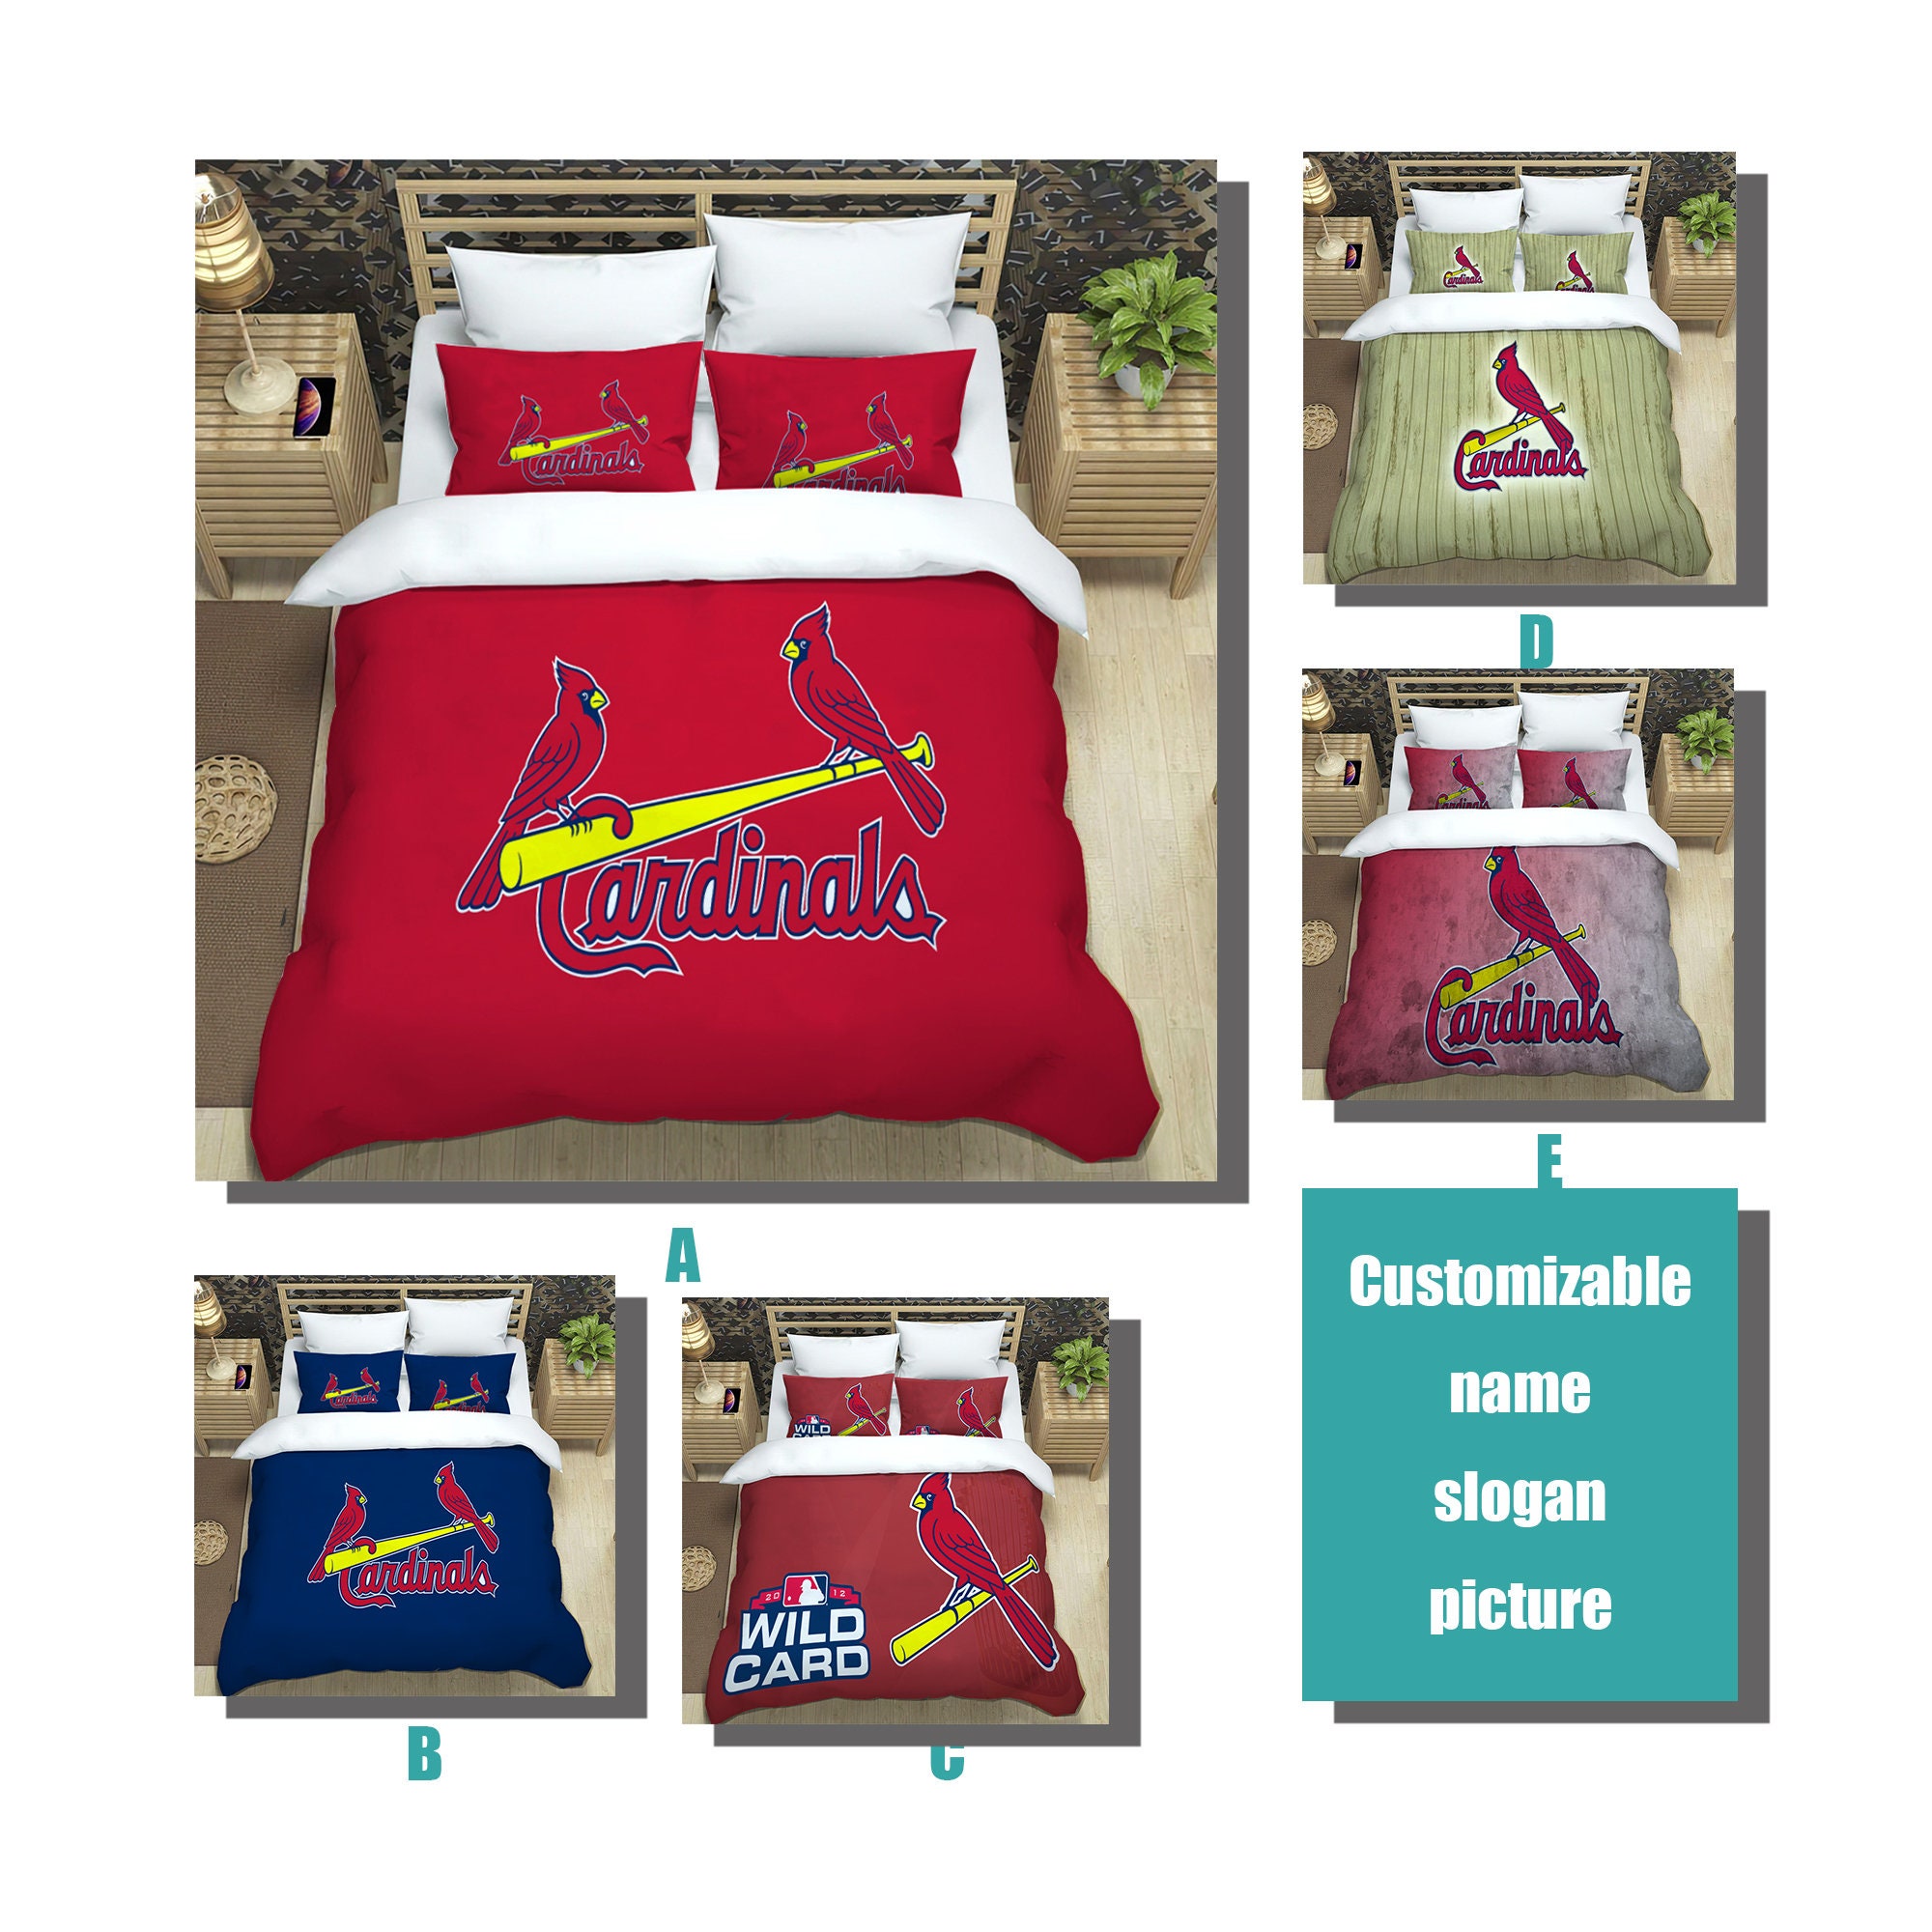 St. Louis Cardinals Plastic Toddler Bed